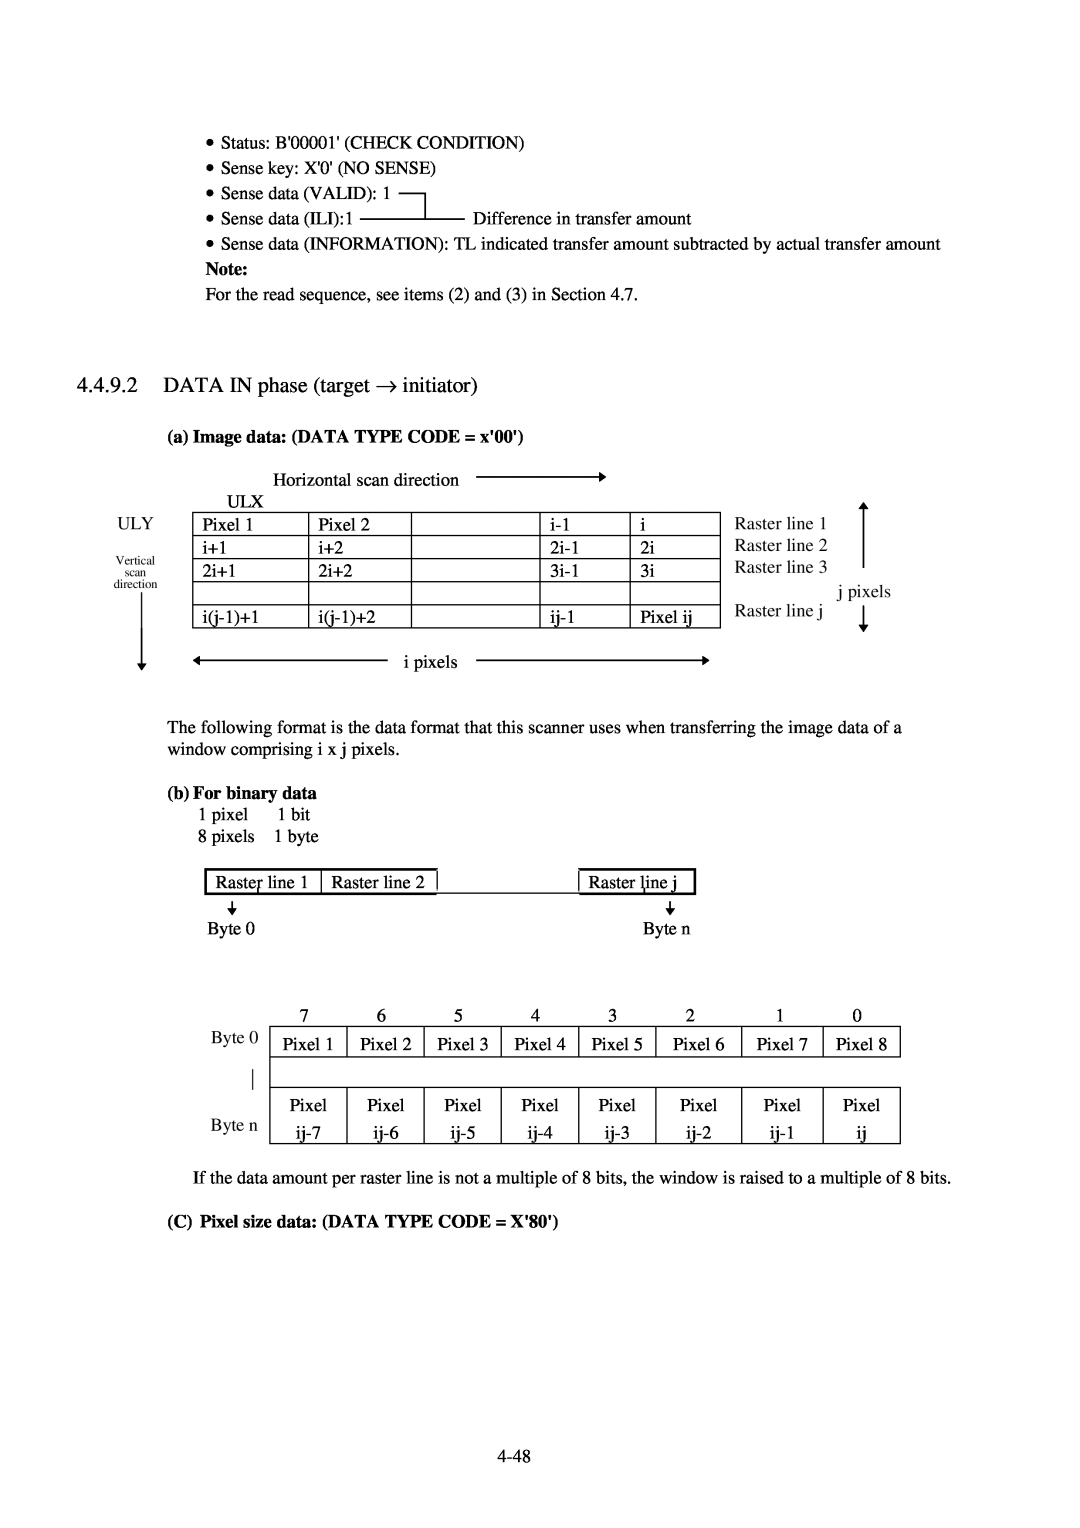 Fujitsu 600C manual DATA IN phase target → initiator, a Image data DATA TYPE CODE =, b For binary data 